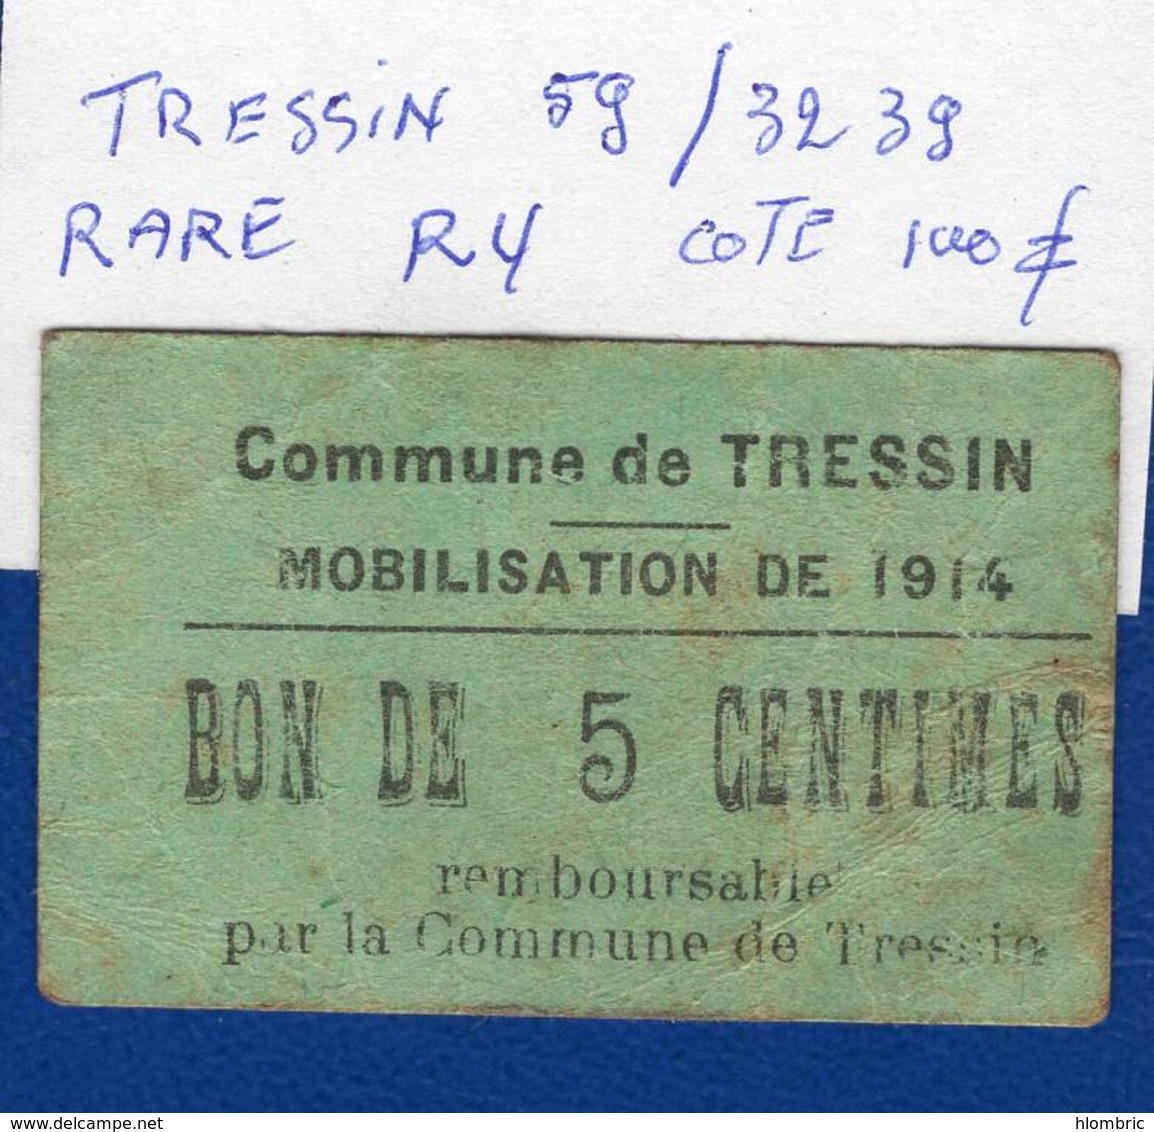 Tressin  59 /3239  Rare  R4  Cote  100 Euros - Bons & Nécessité